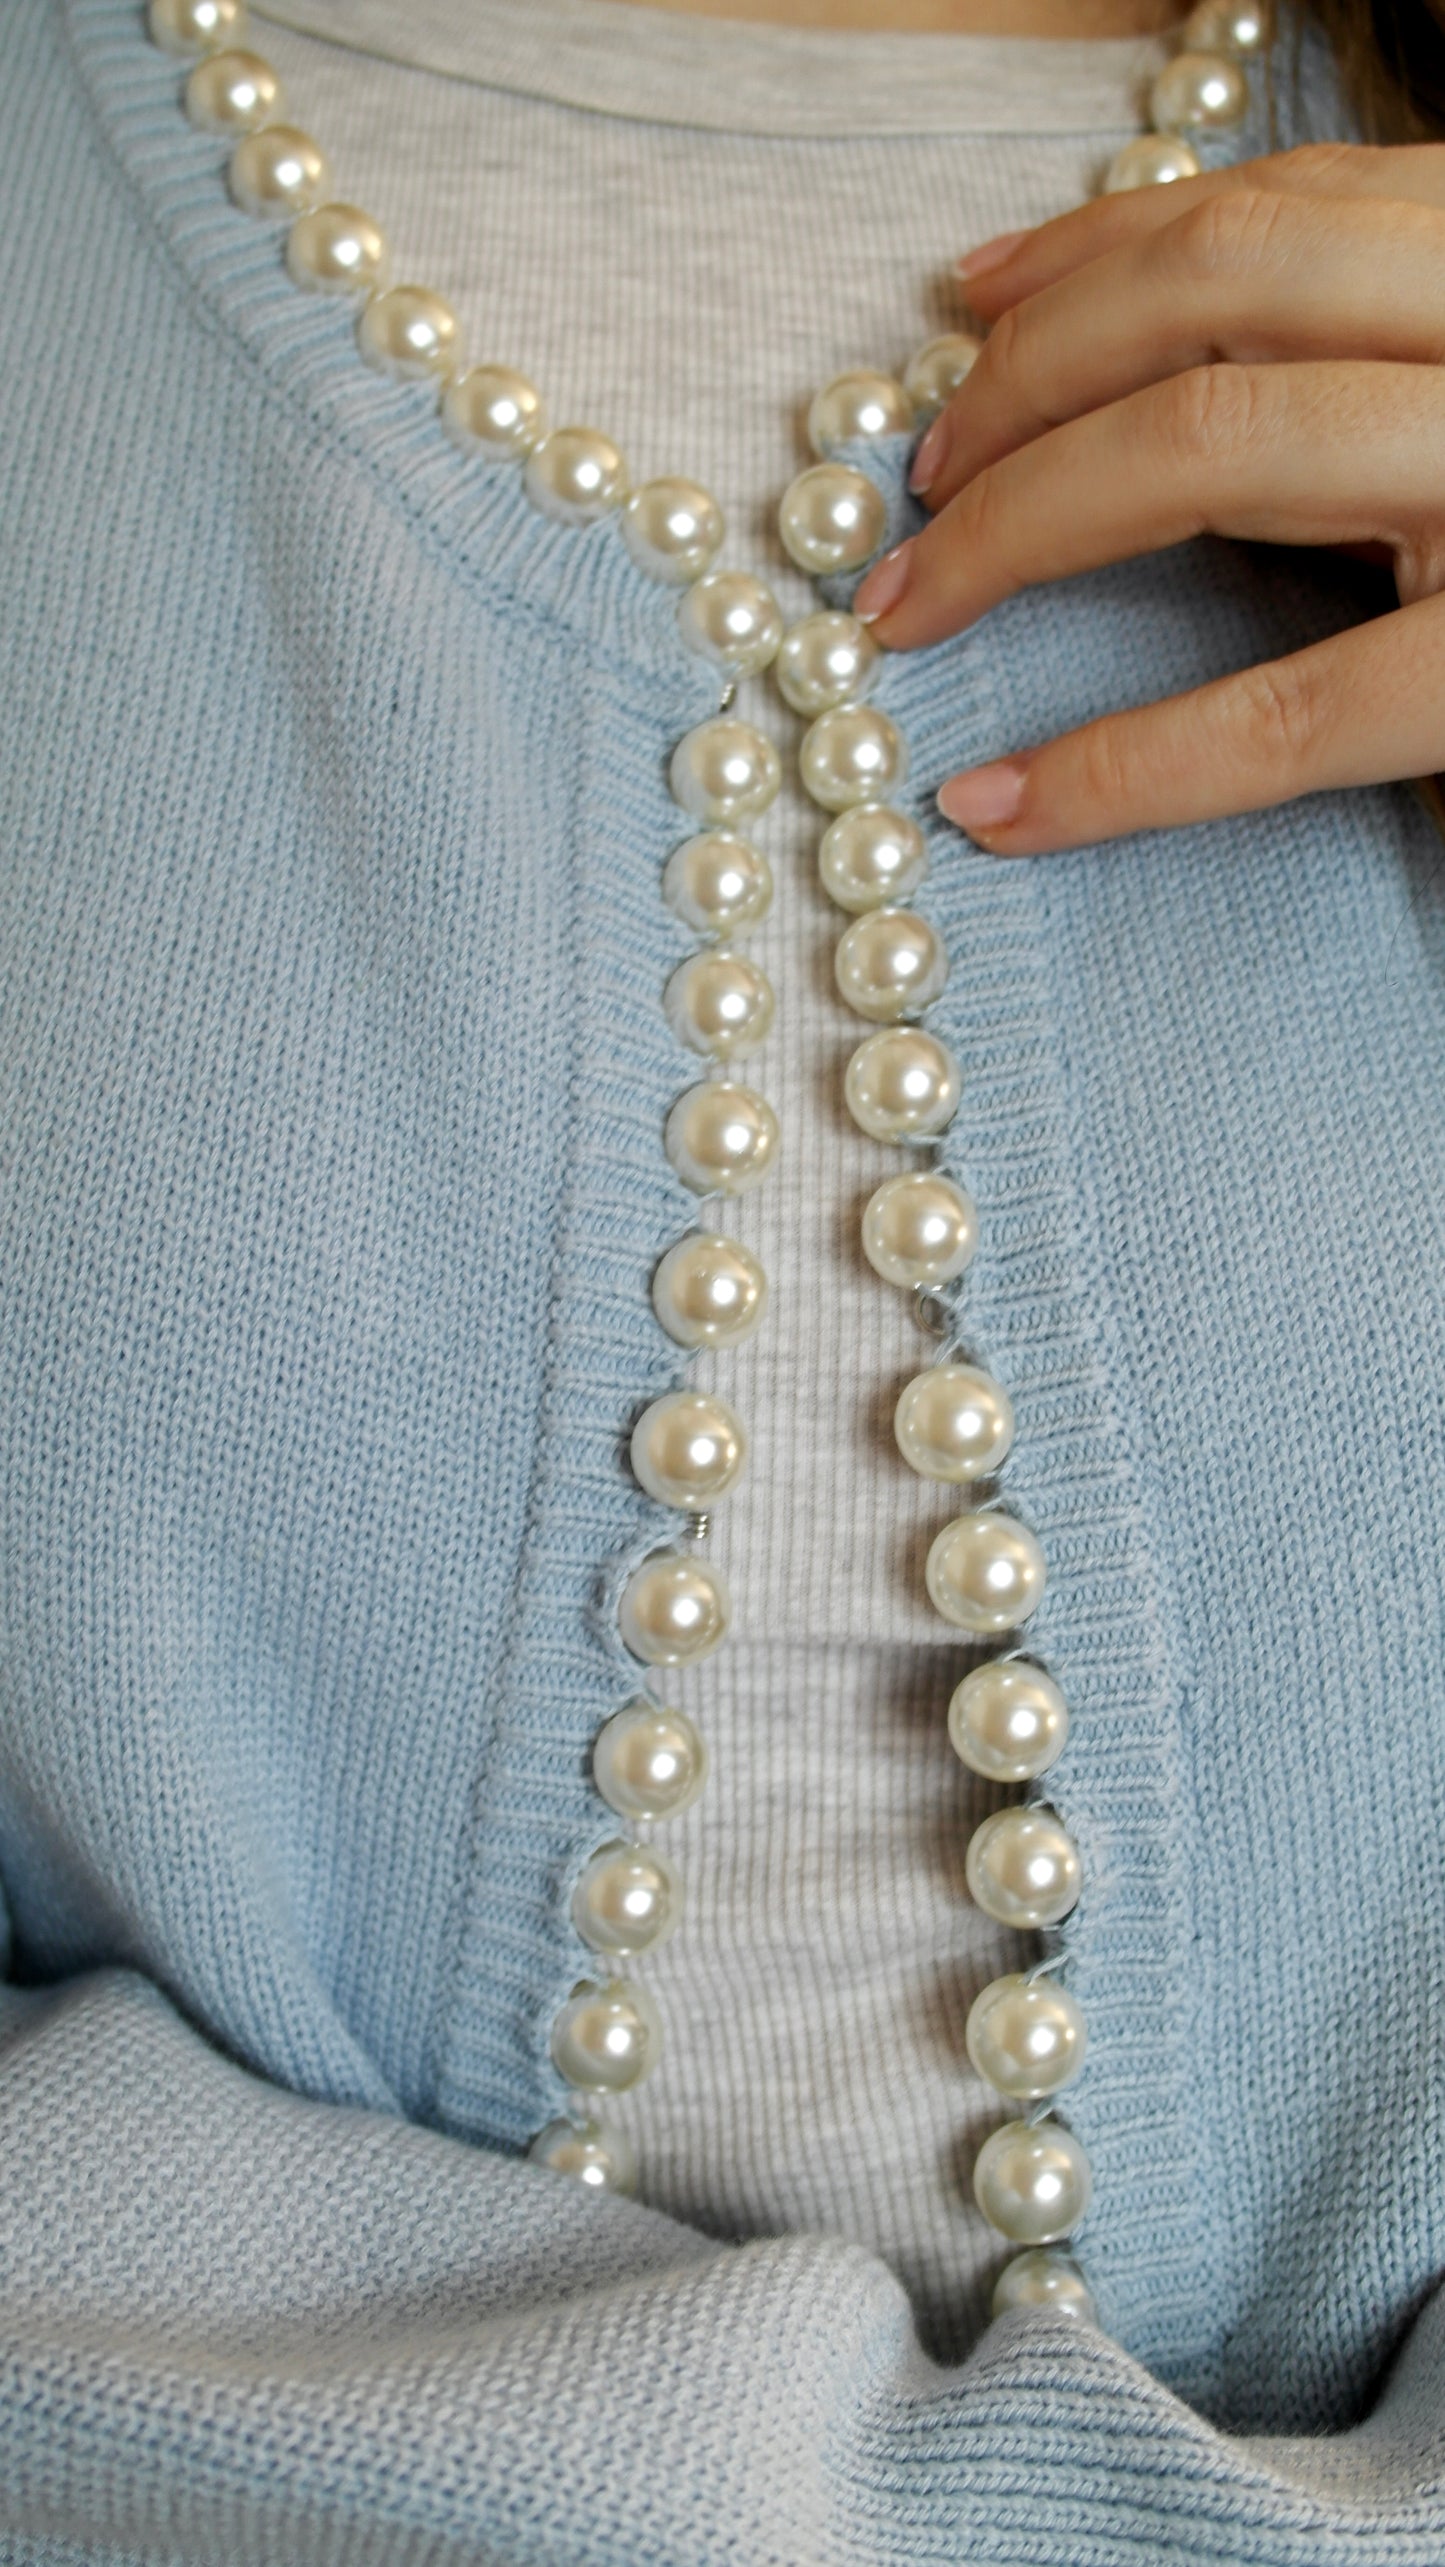 Charlotte pearl trim cardigan in cornflower blue